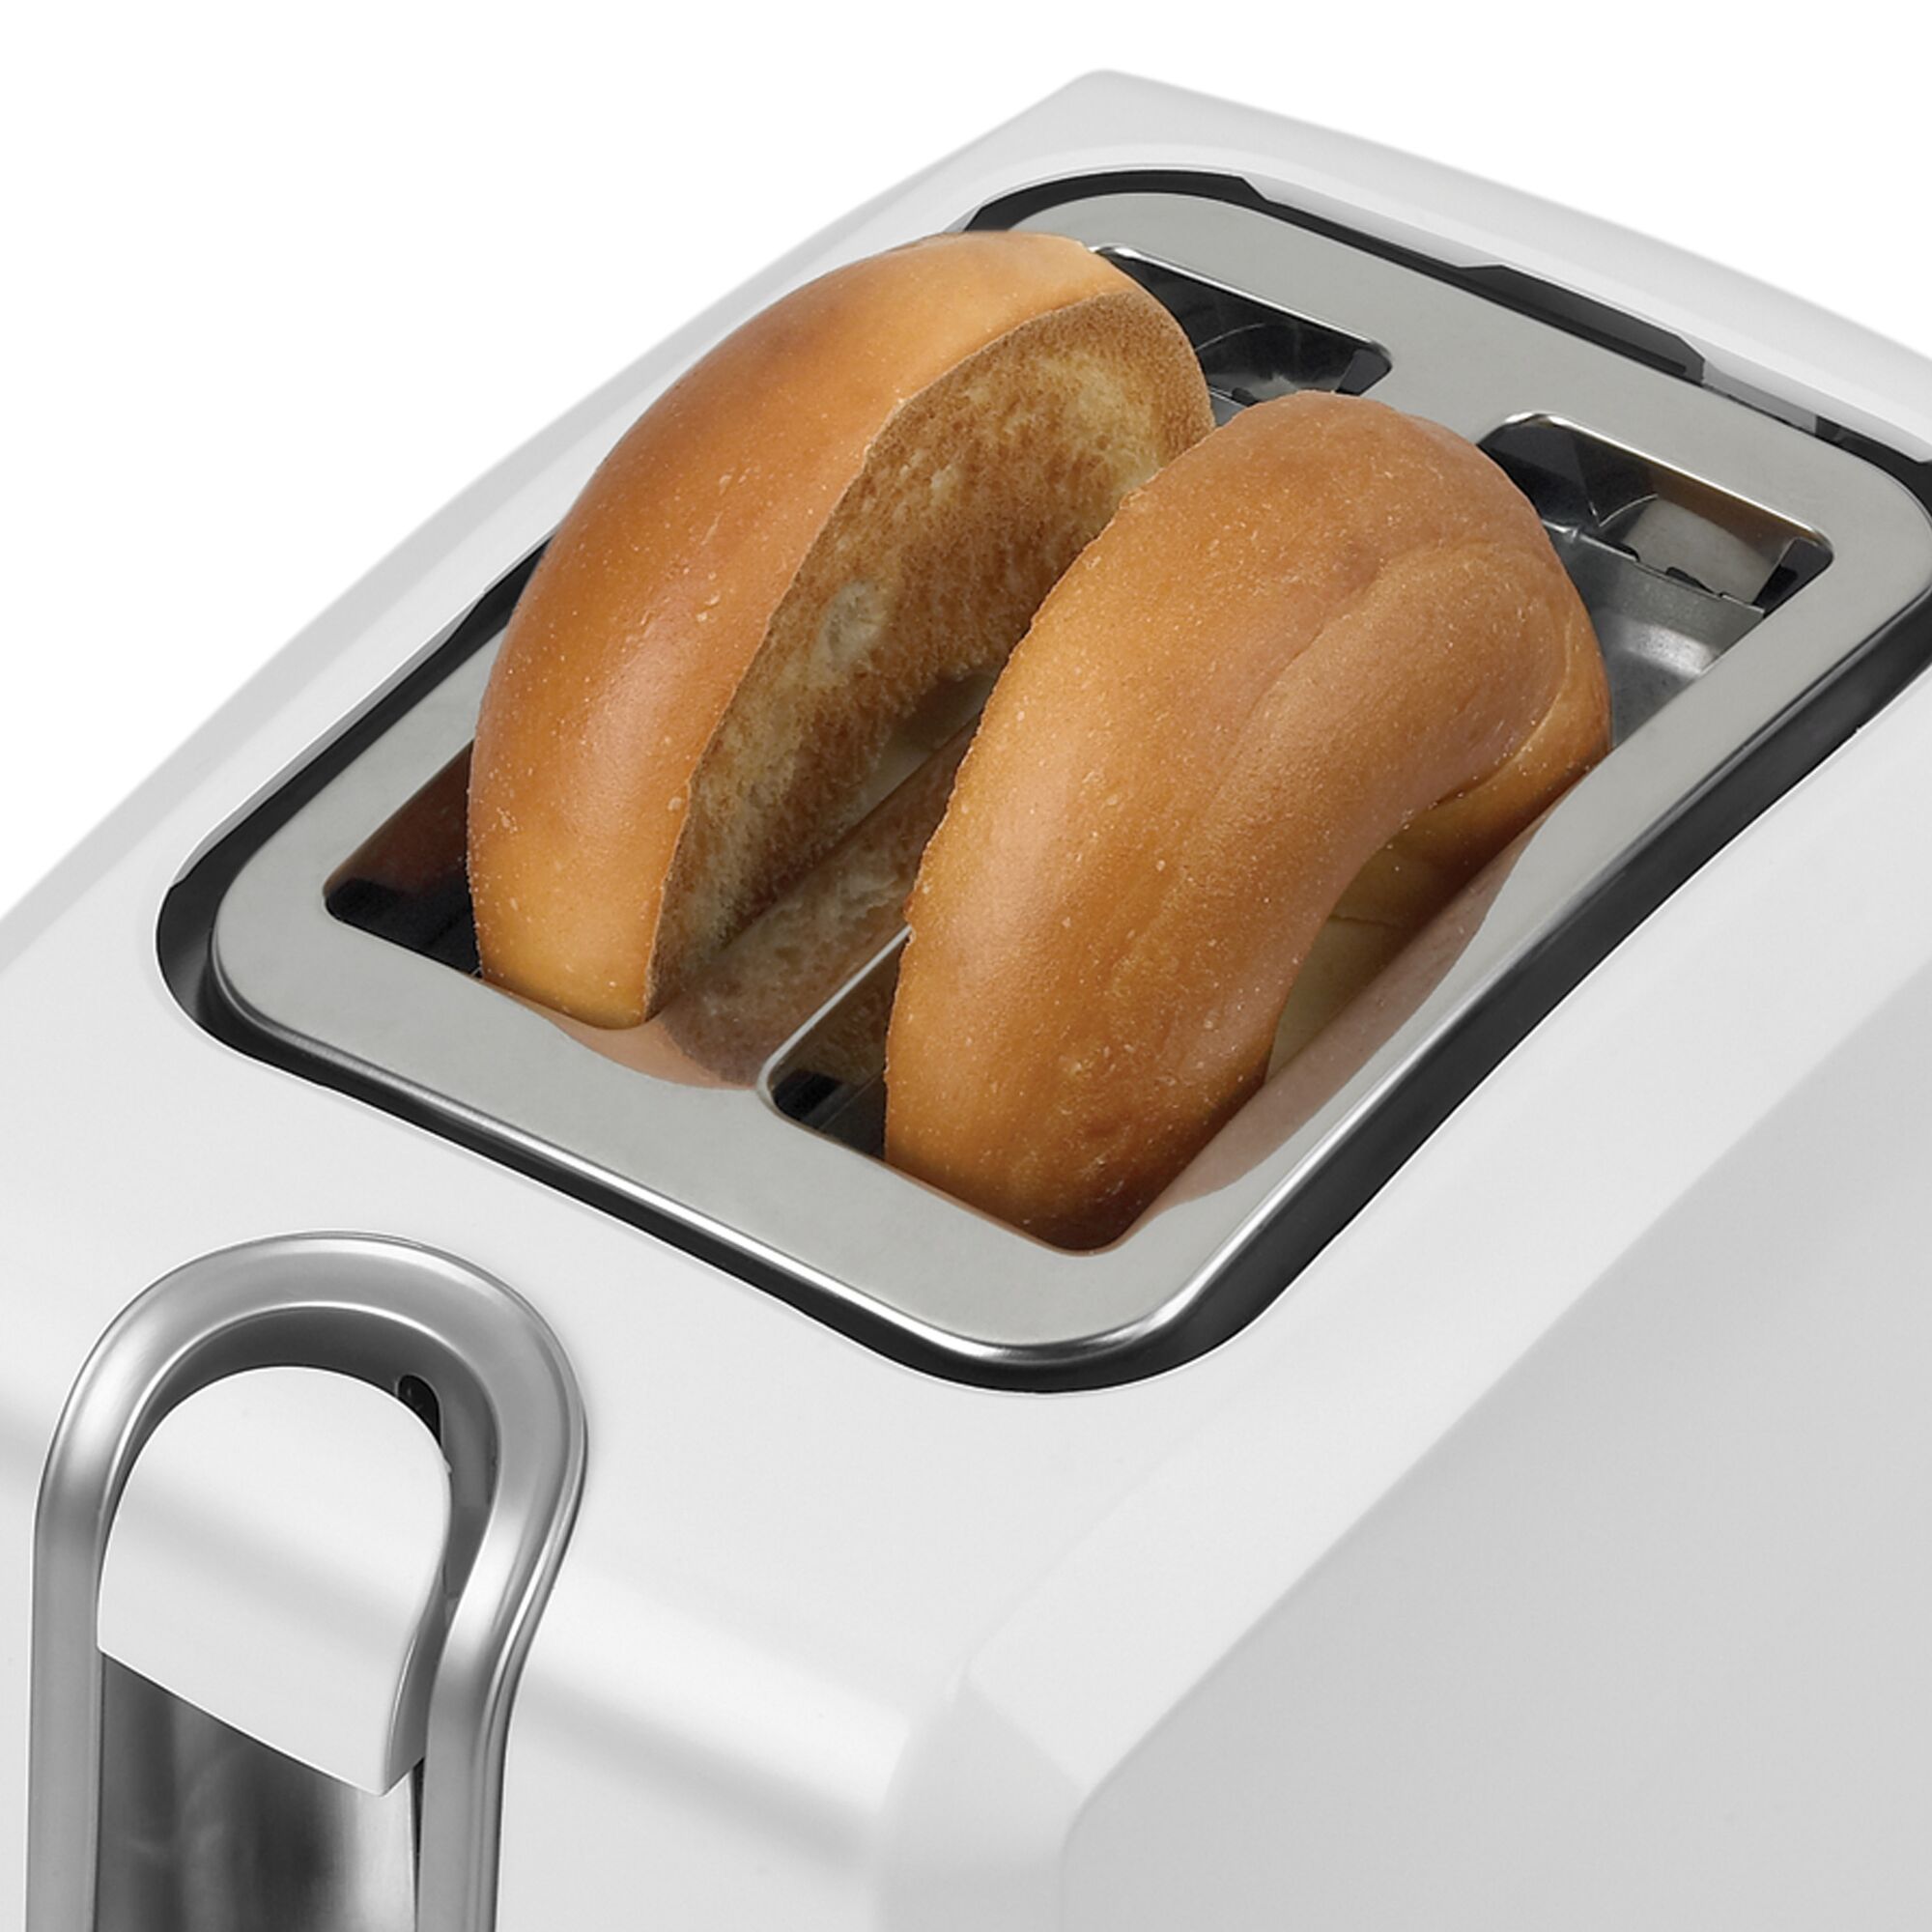 Profile of 2 slice toaster.